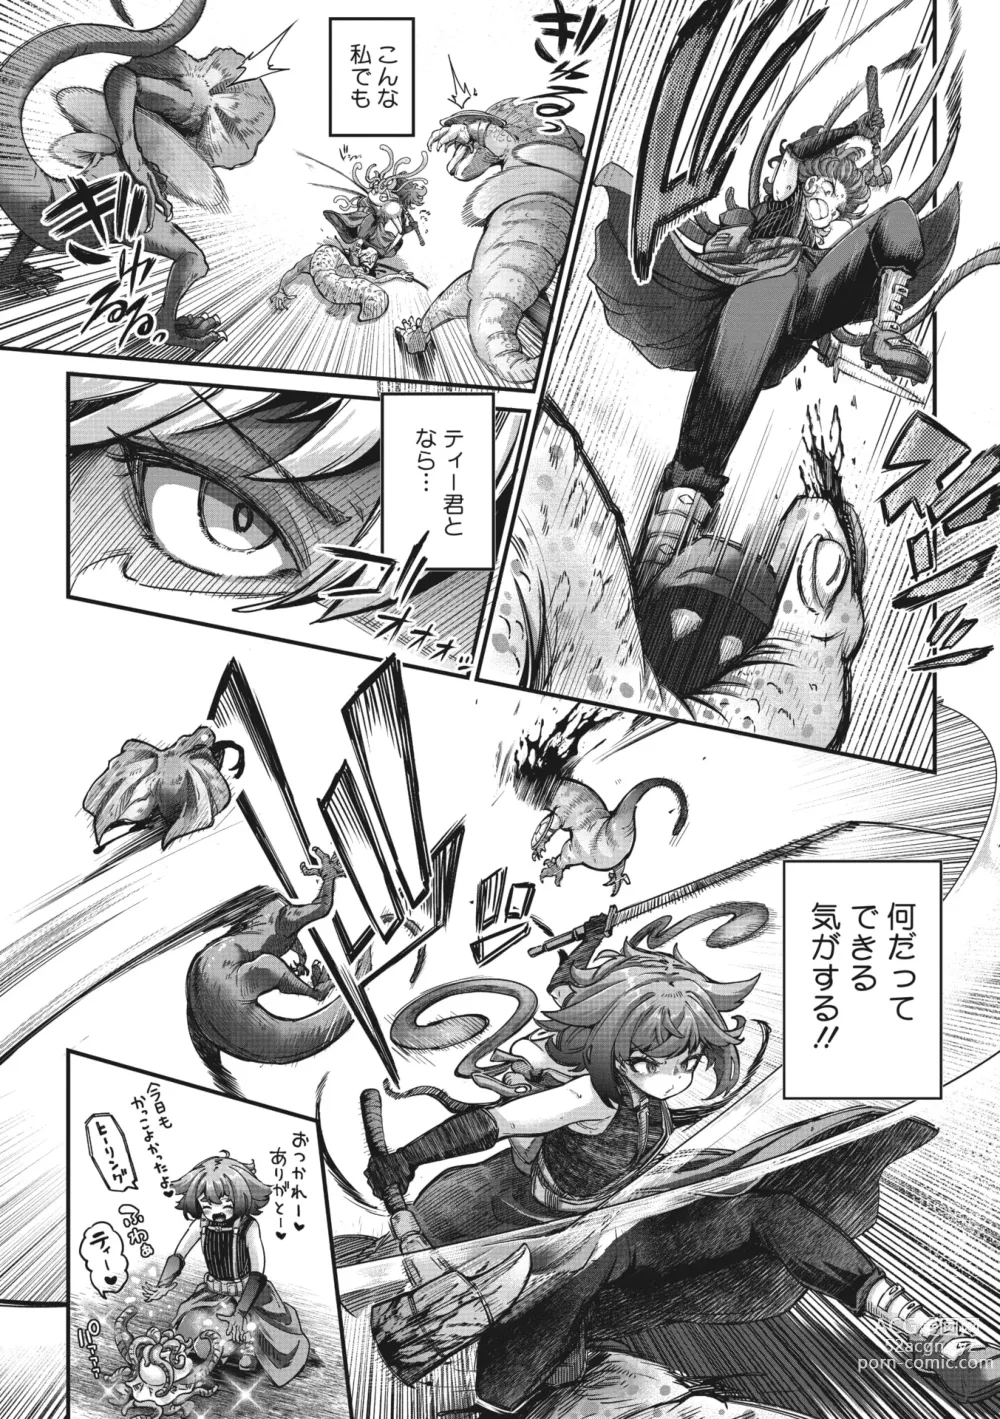 Page 6 of manga COMIC GAIRA Vol. 14